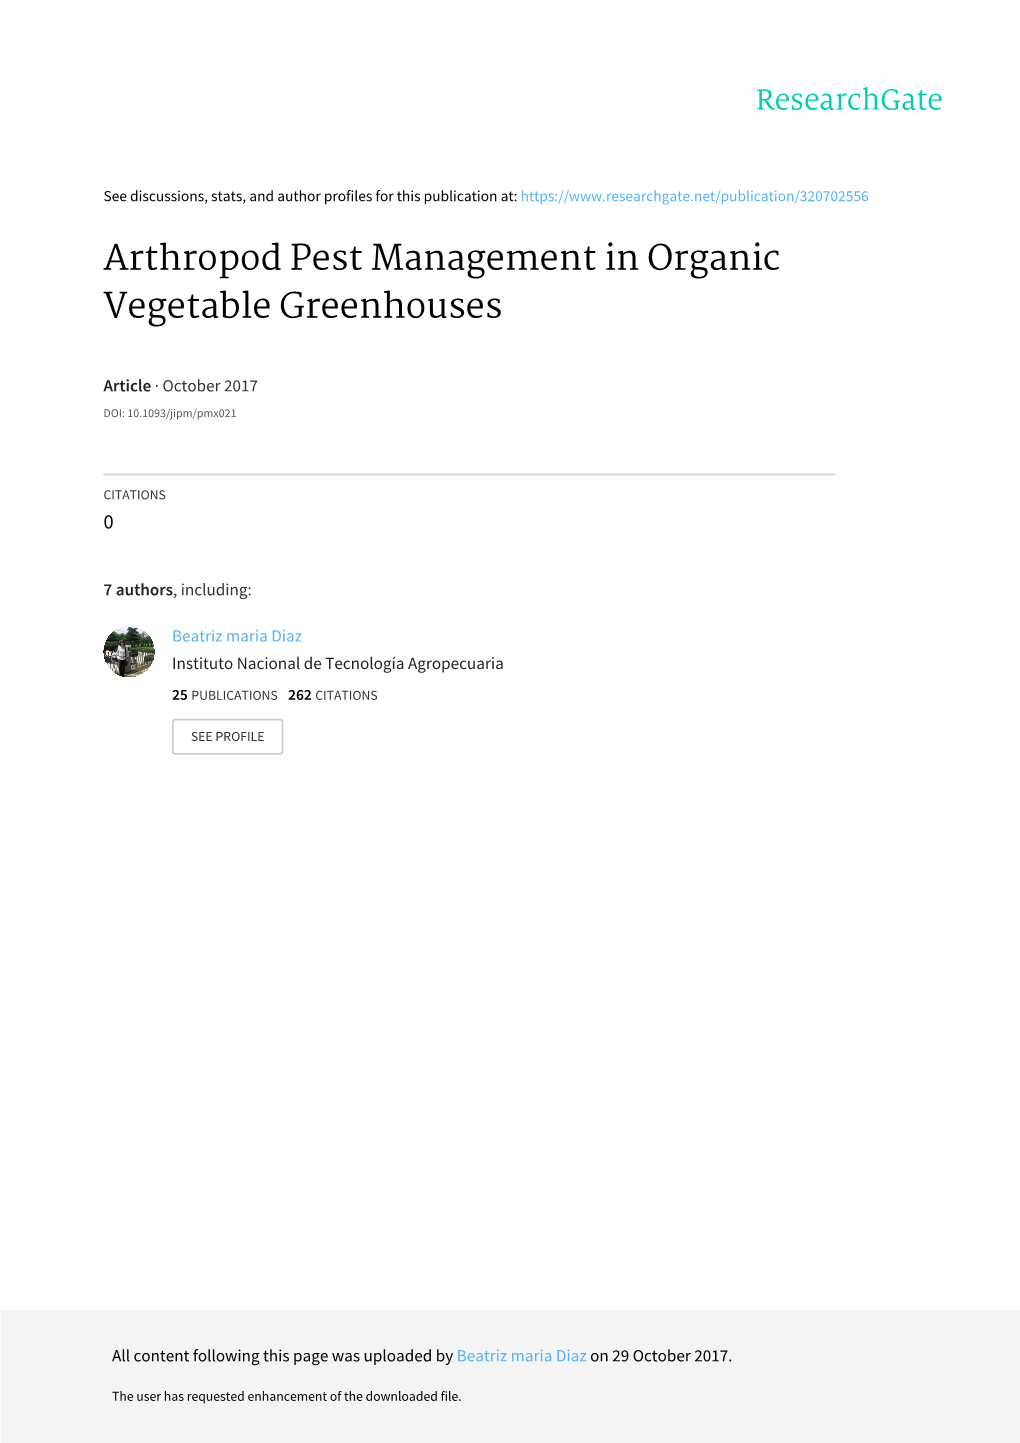 Arthropod Pest Management in Organic Vegetable Greenhouses